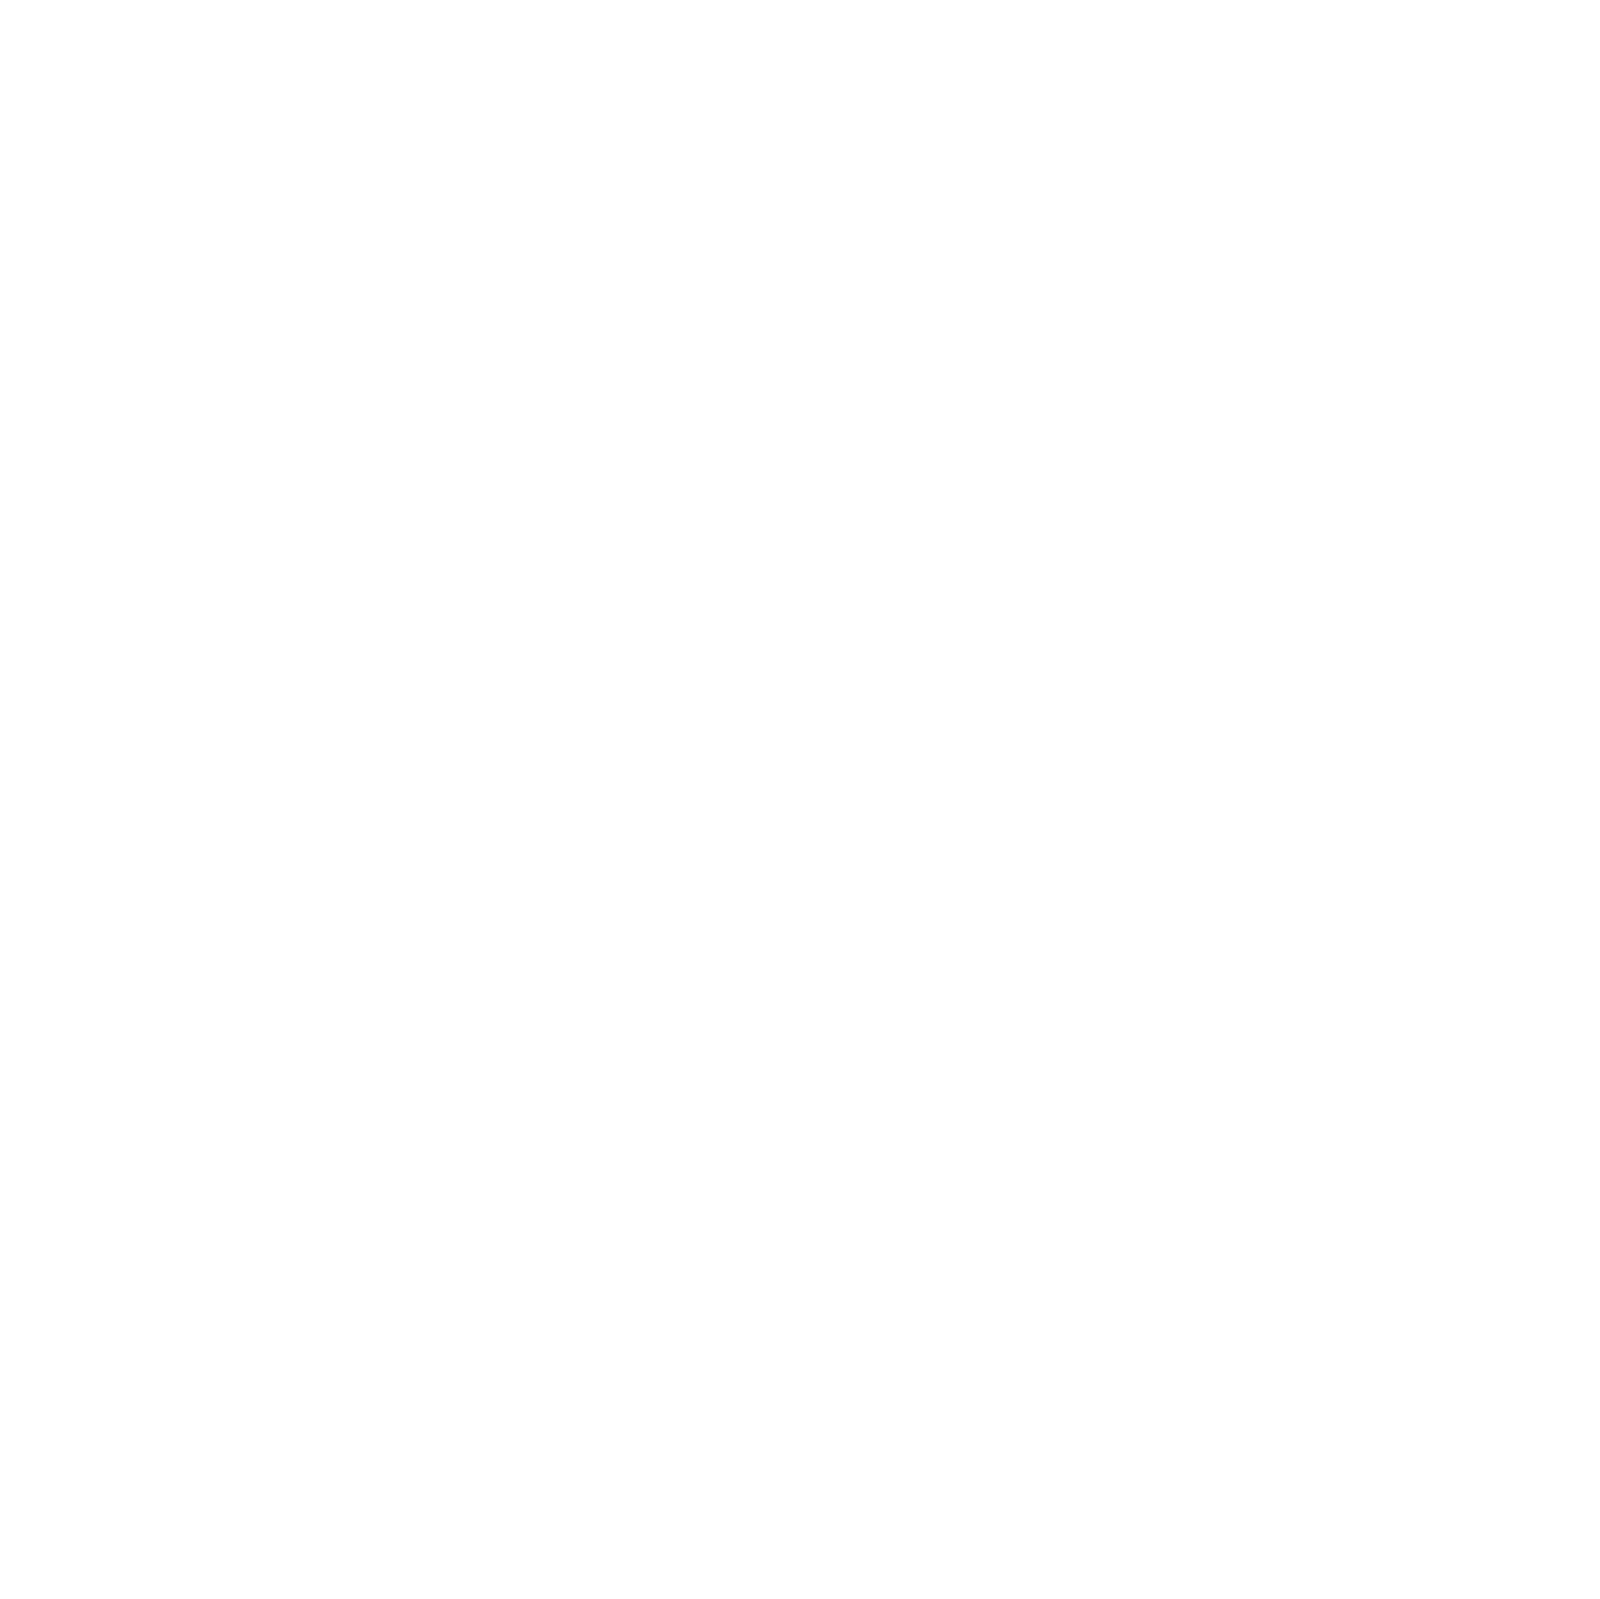 Shielded Life